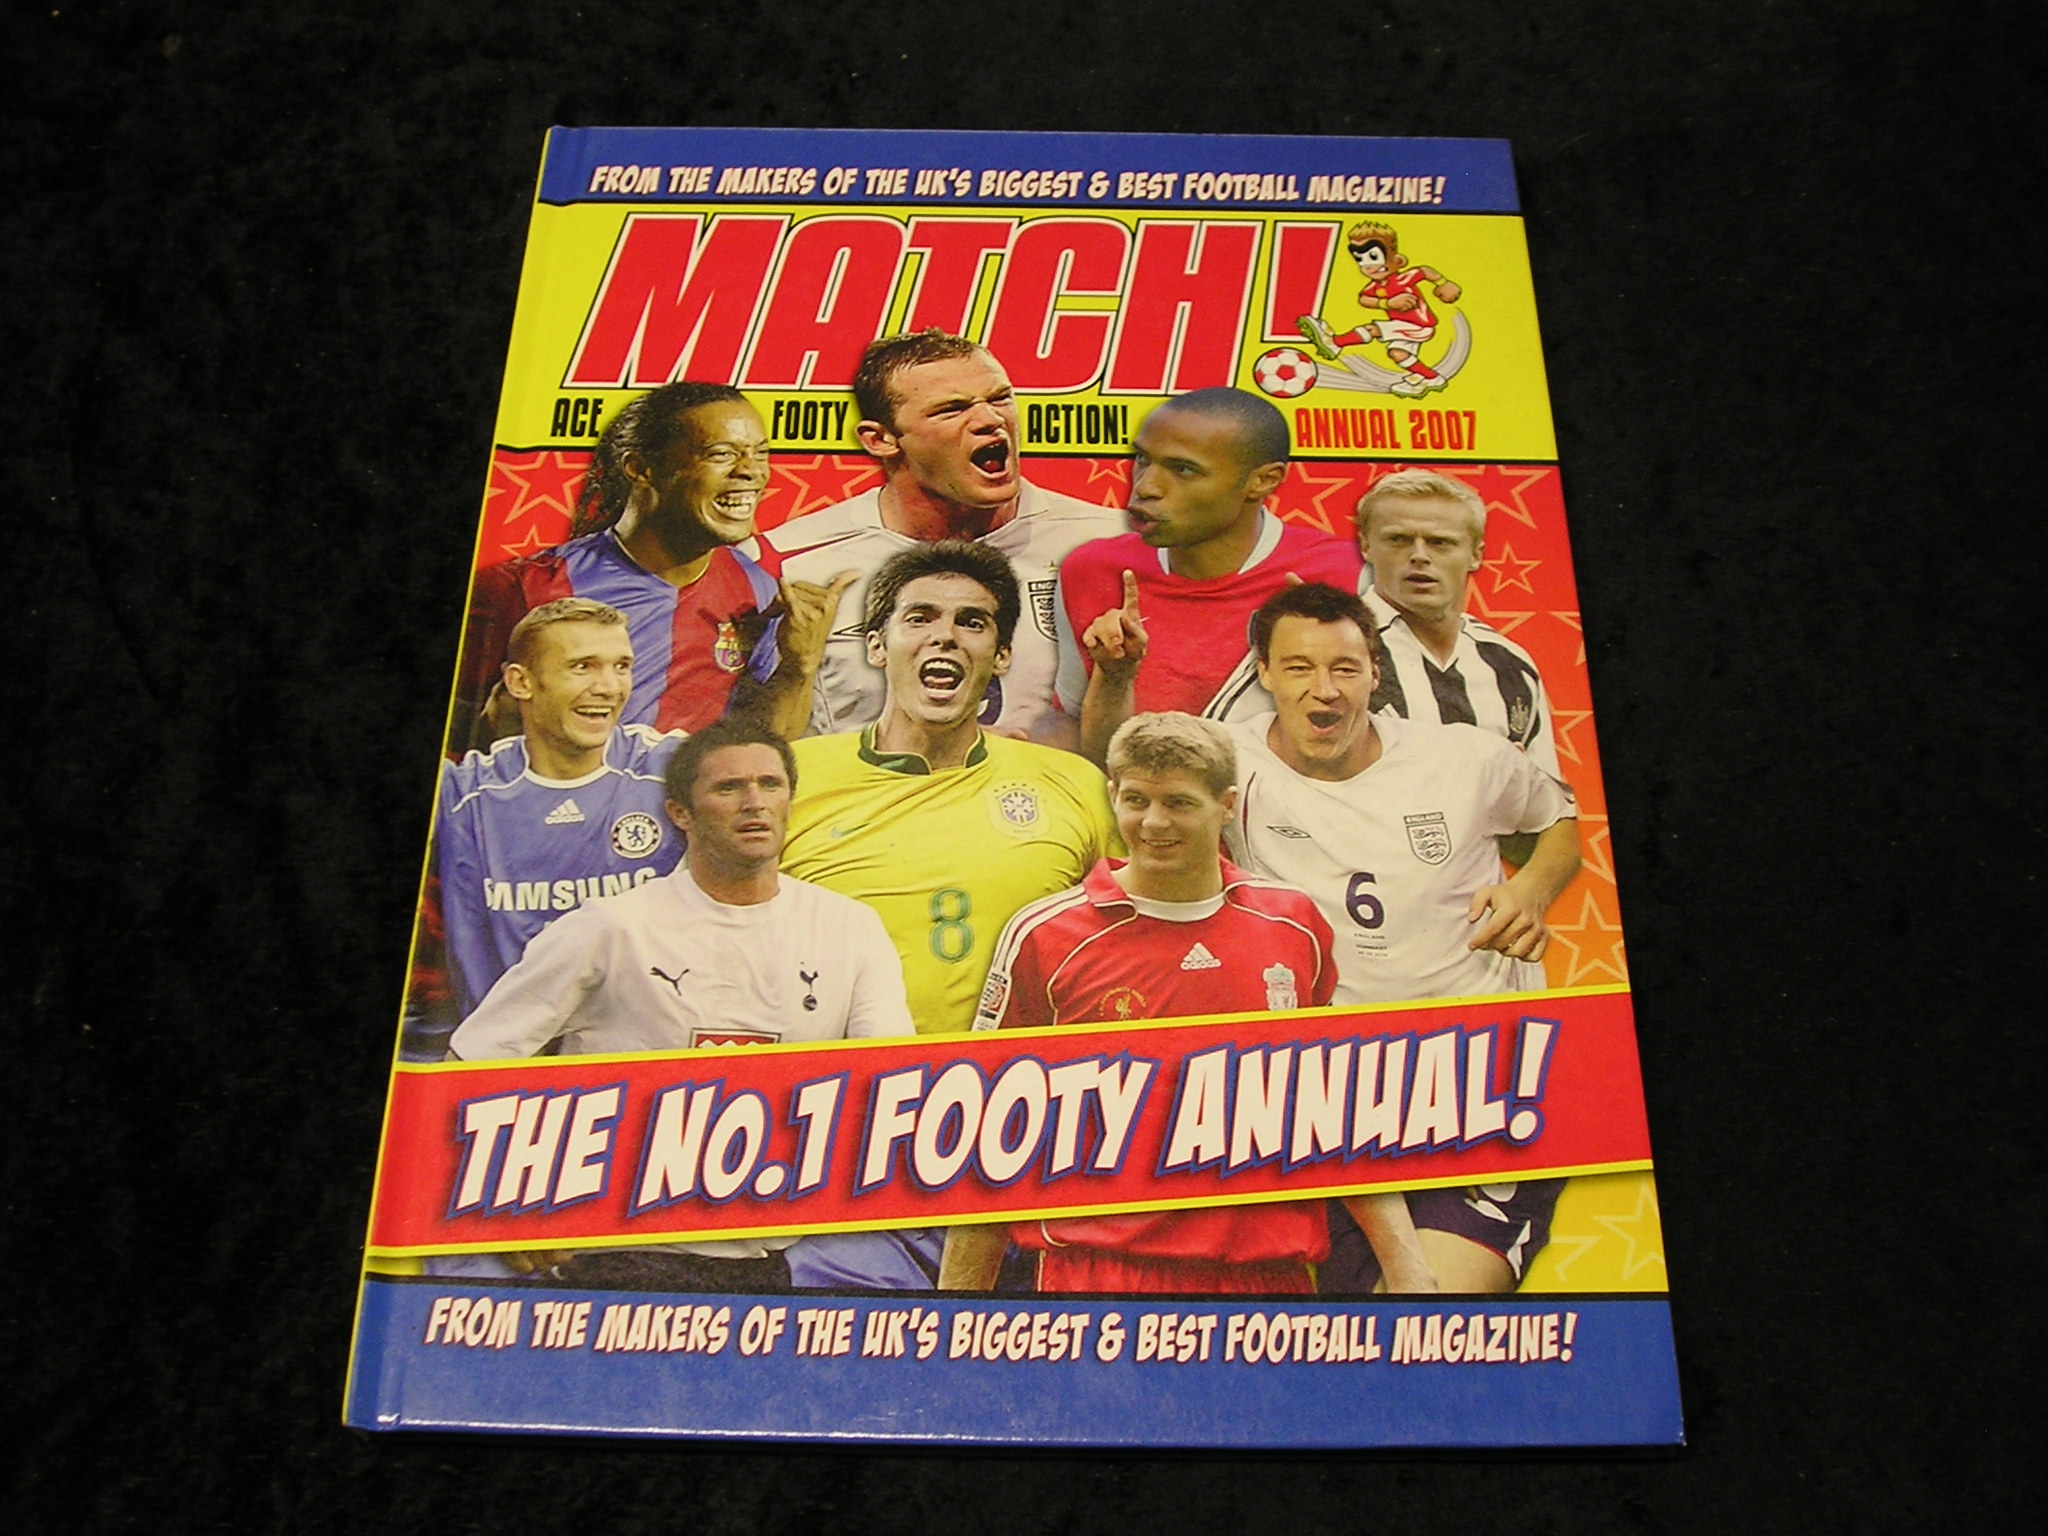 Match 2007 Annual